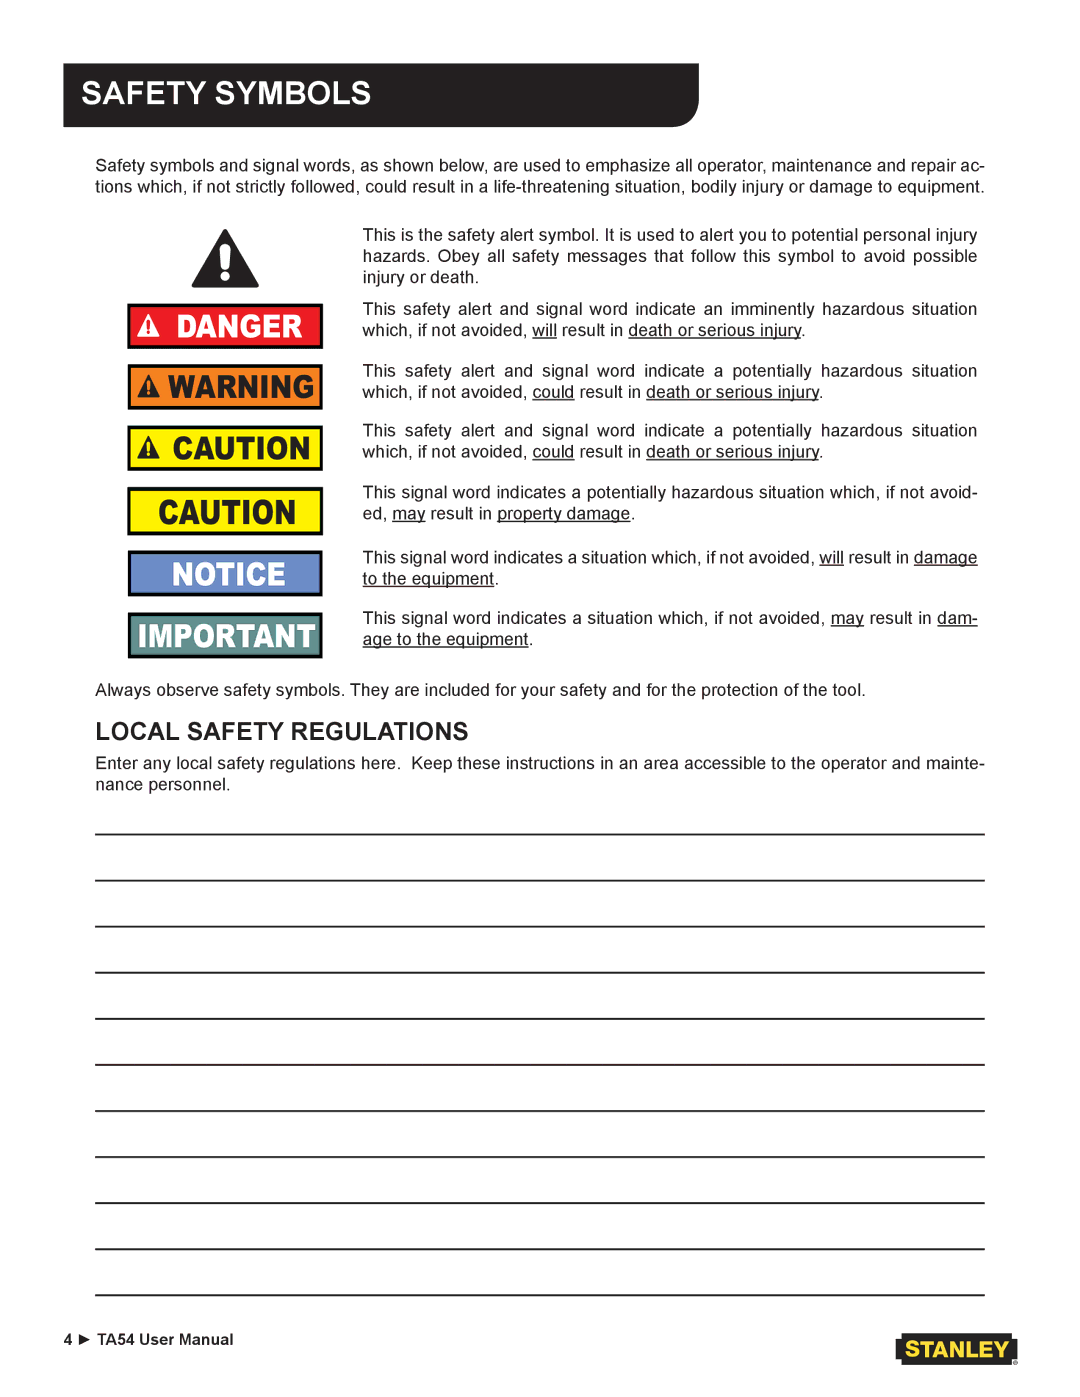 Stanley Black & Decker TA54 user manual Safety Symbols, Local Safety Regulations 